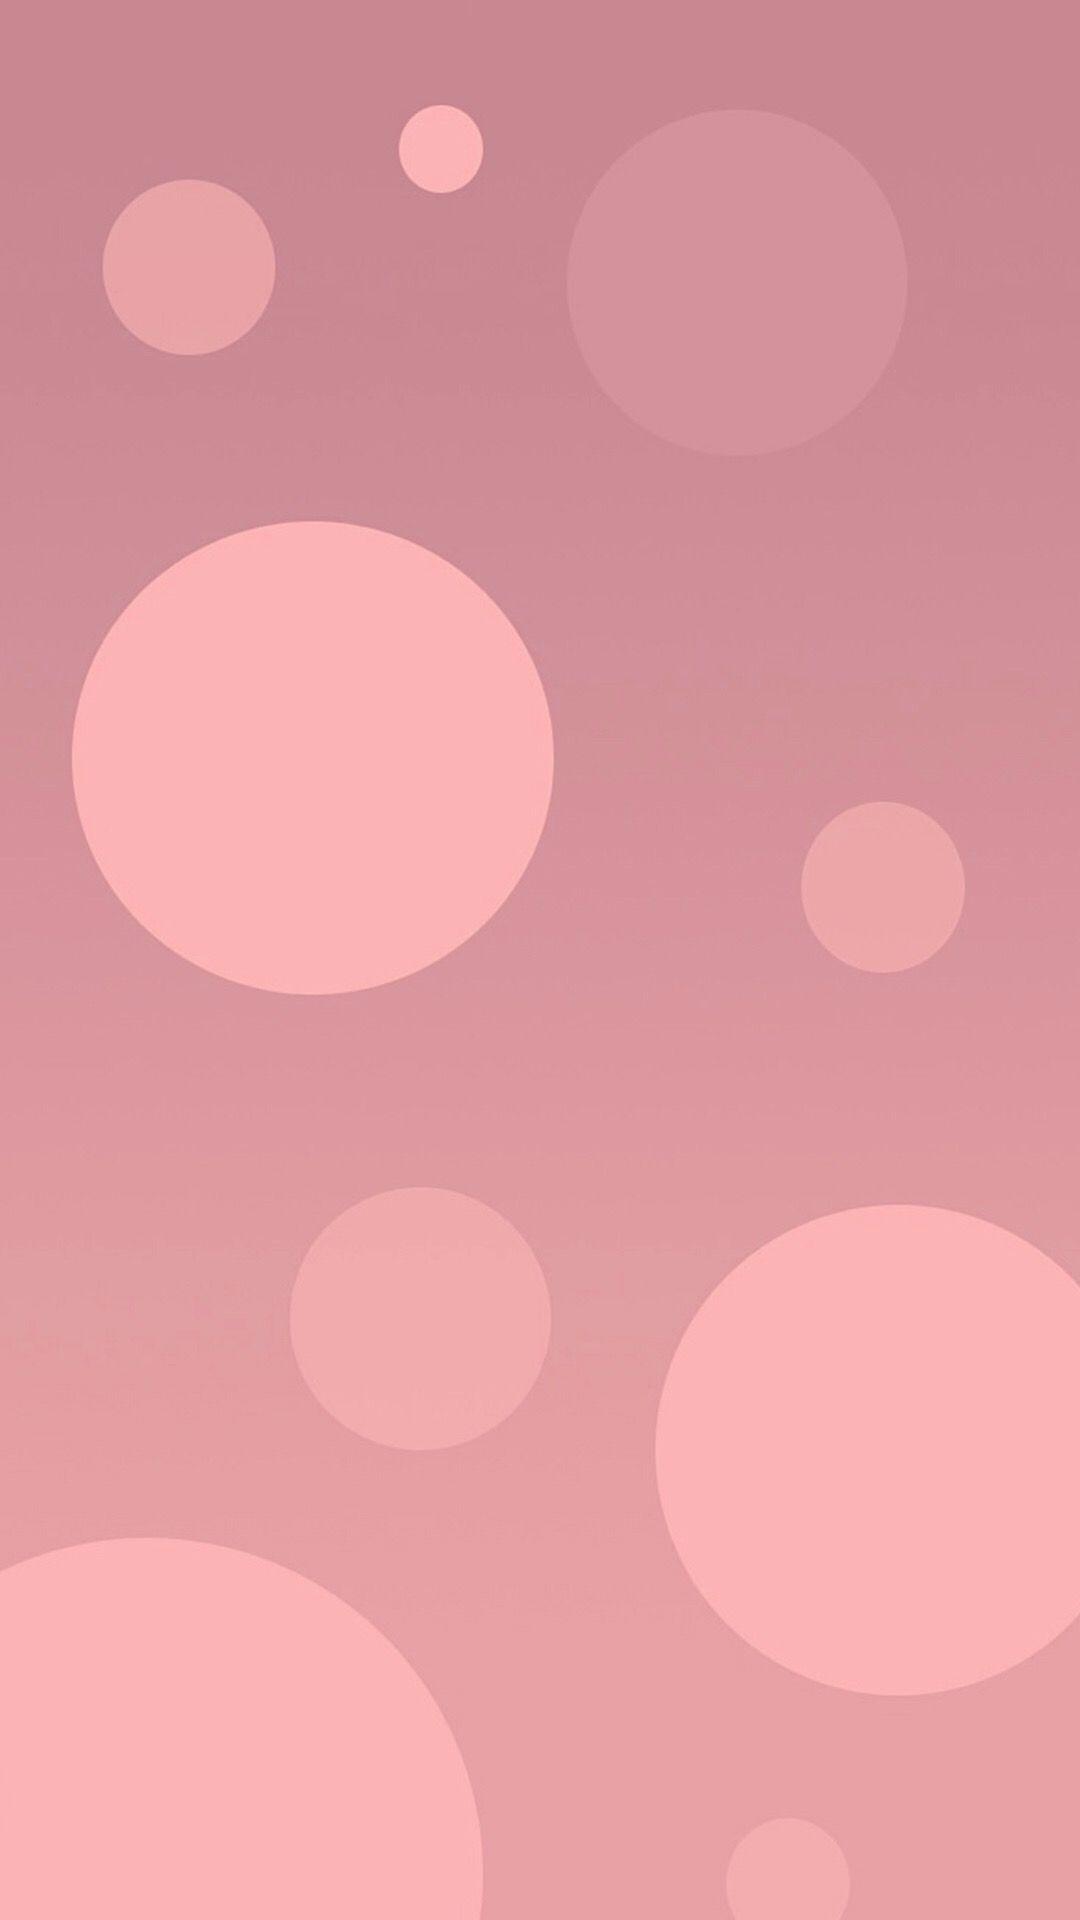 Image result for rose gold iphone wallpaper. Wallpaper. Rose gold